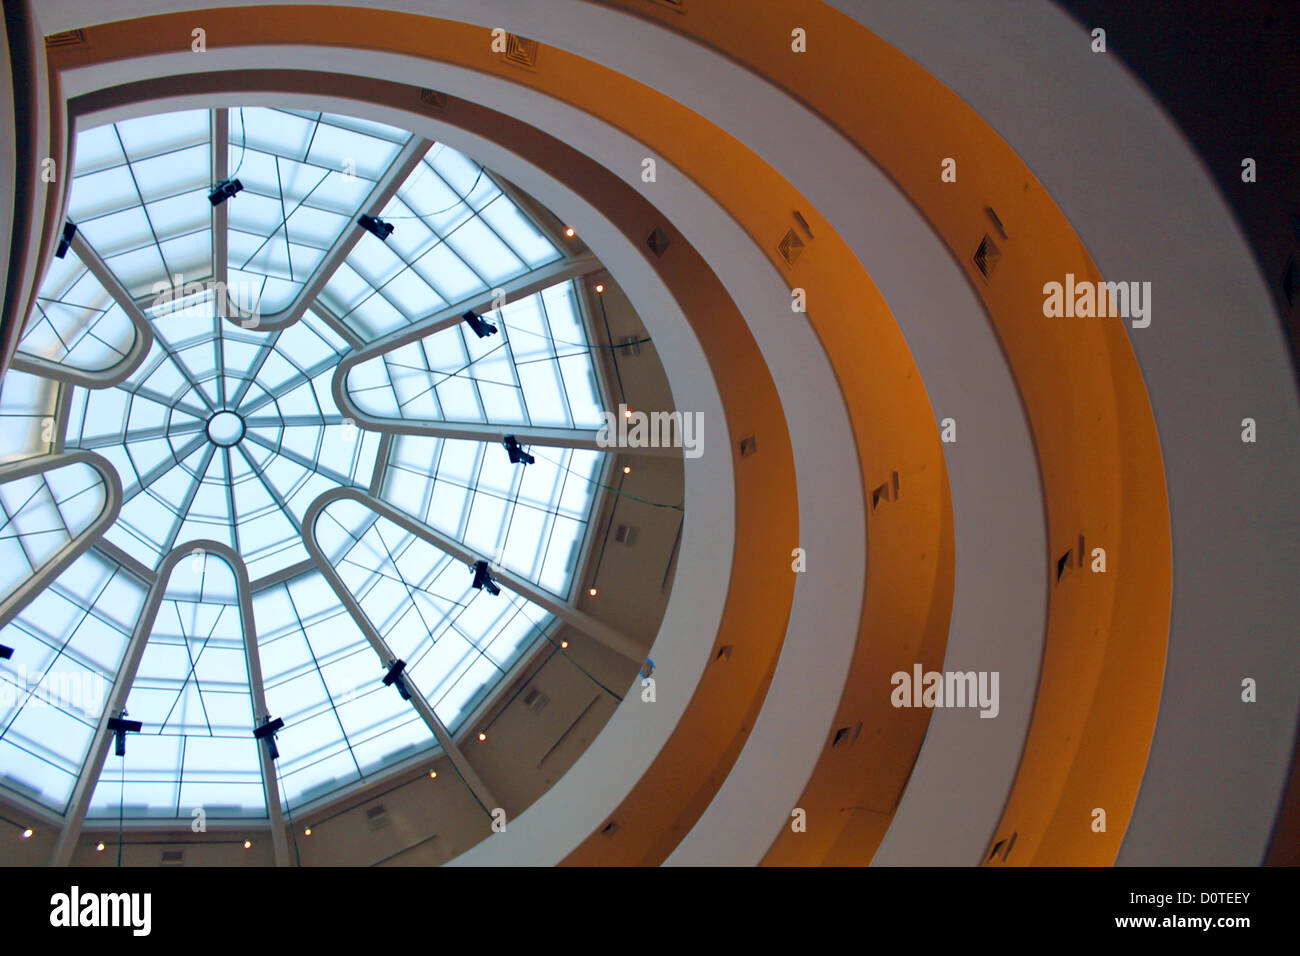 The internal structure of the Guggenheim Museum (La struttura interna del museo Guggenheim) Stock Photo